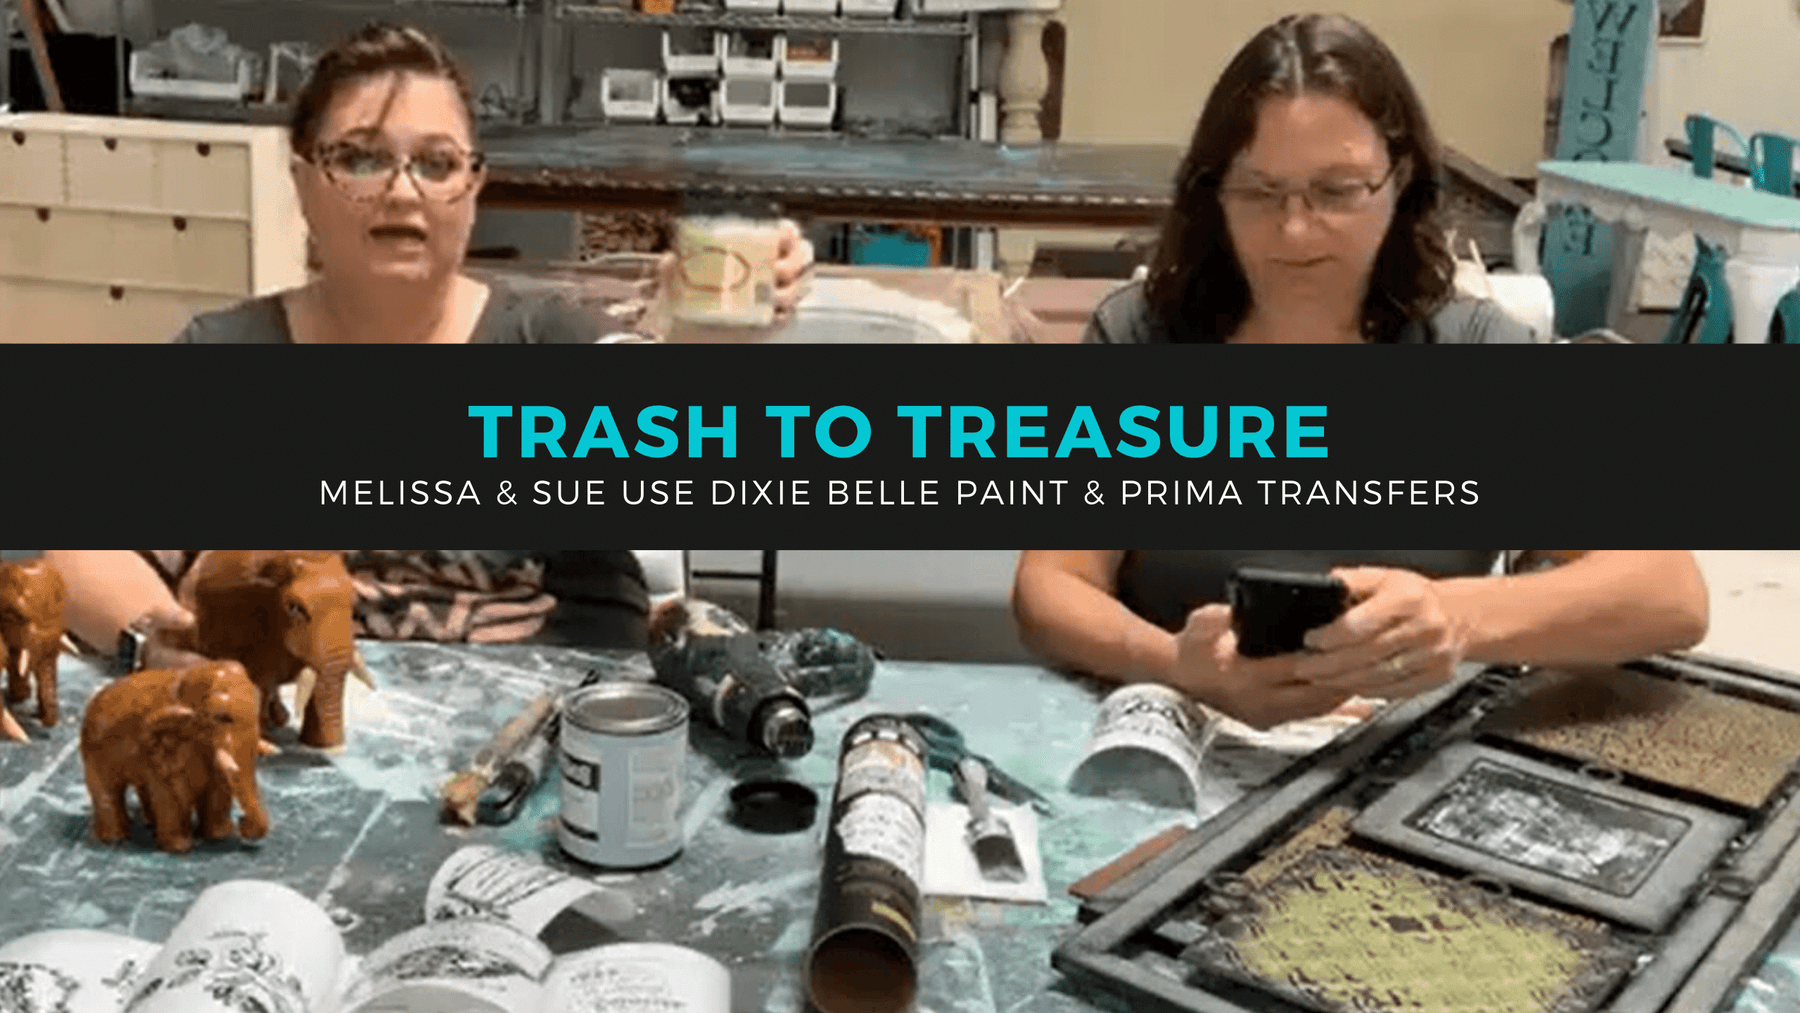 Dixie Belle Paint Premier Retailer in Jacksonville, FL offers DIY tutorials on YouTube